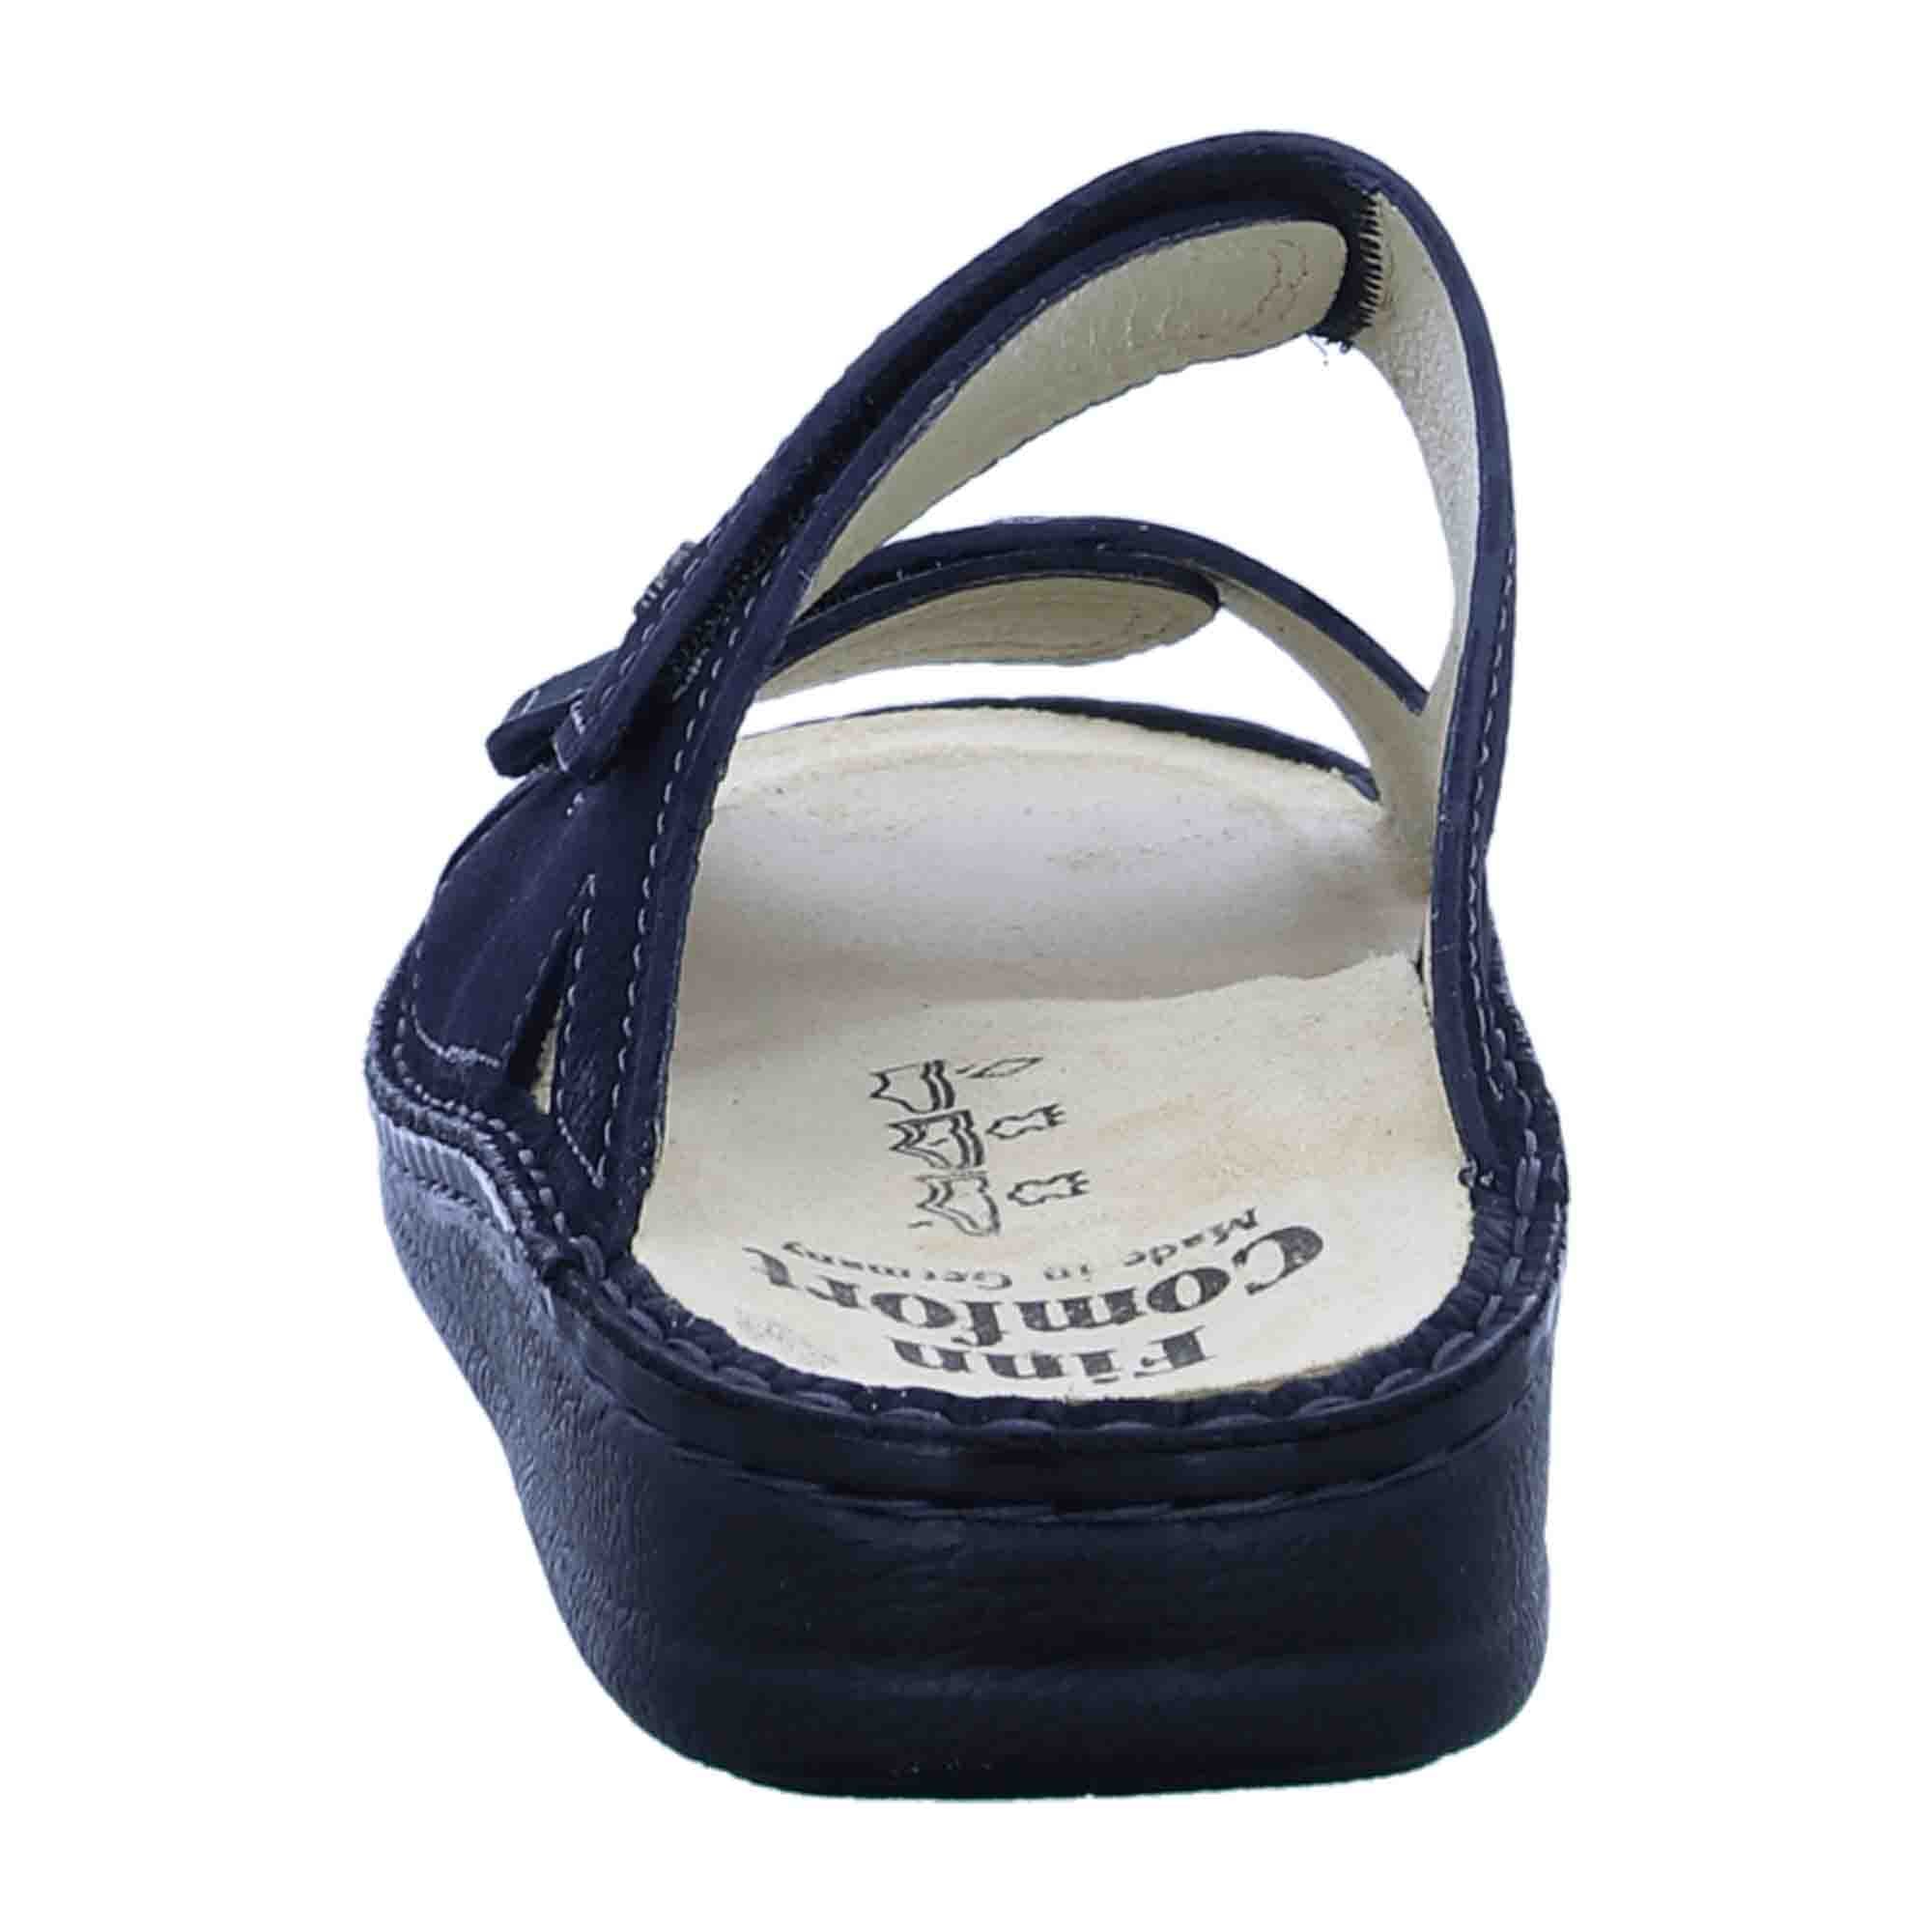 Finn Comfort Danzig-S Men's Comfort Sandals - Stylish Blue Leather